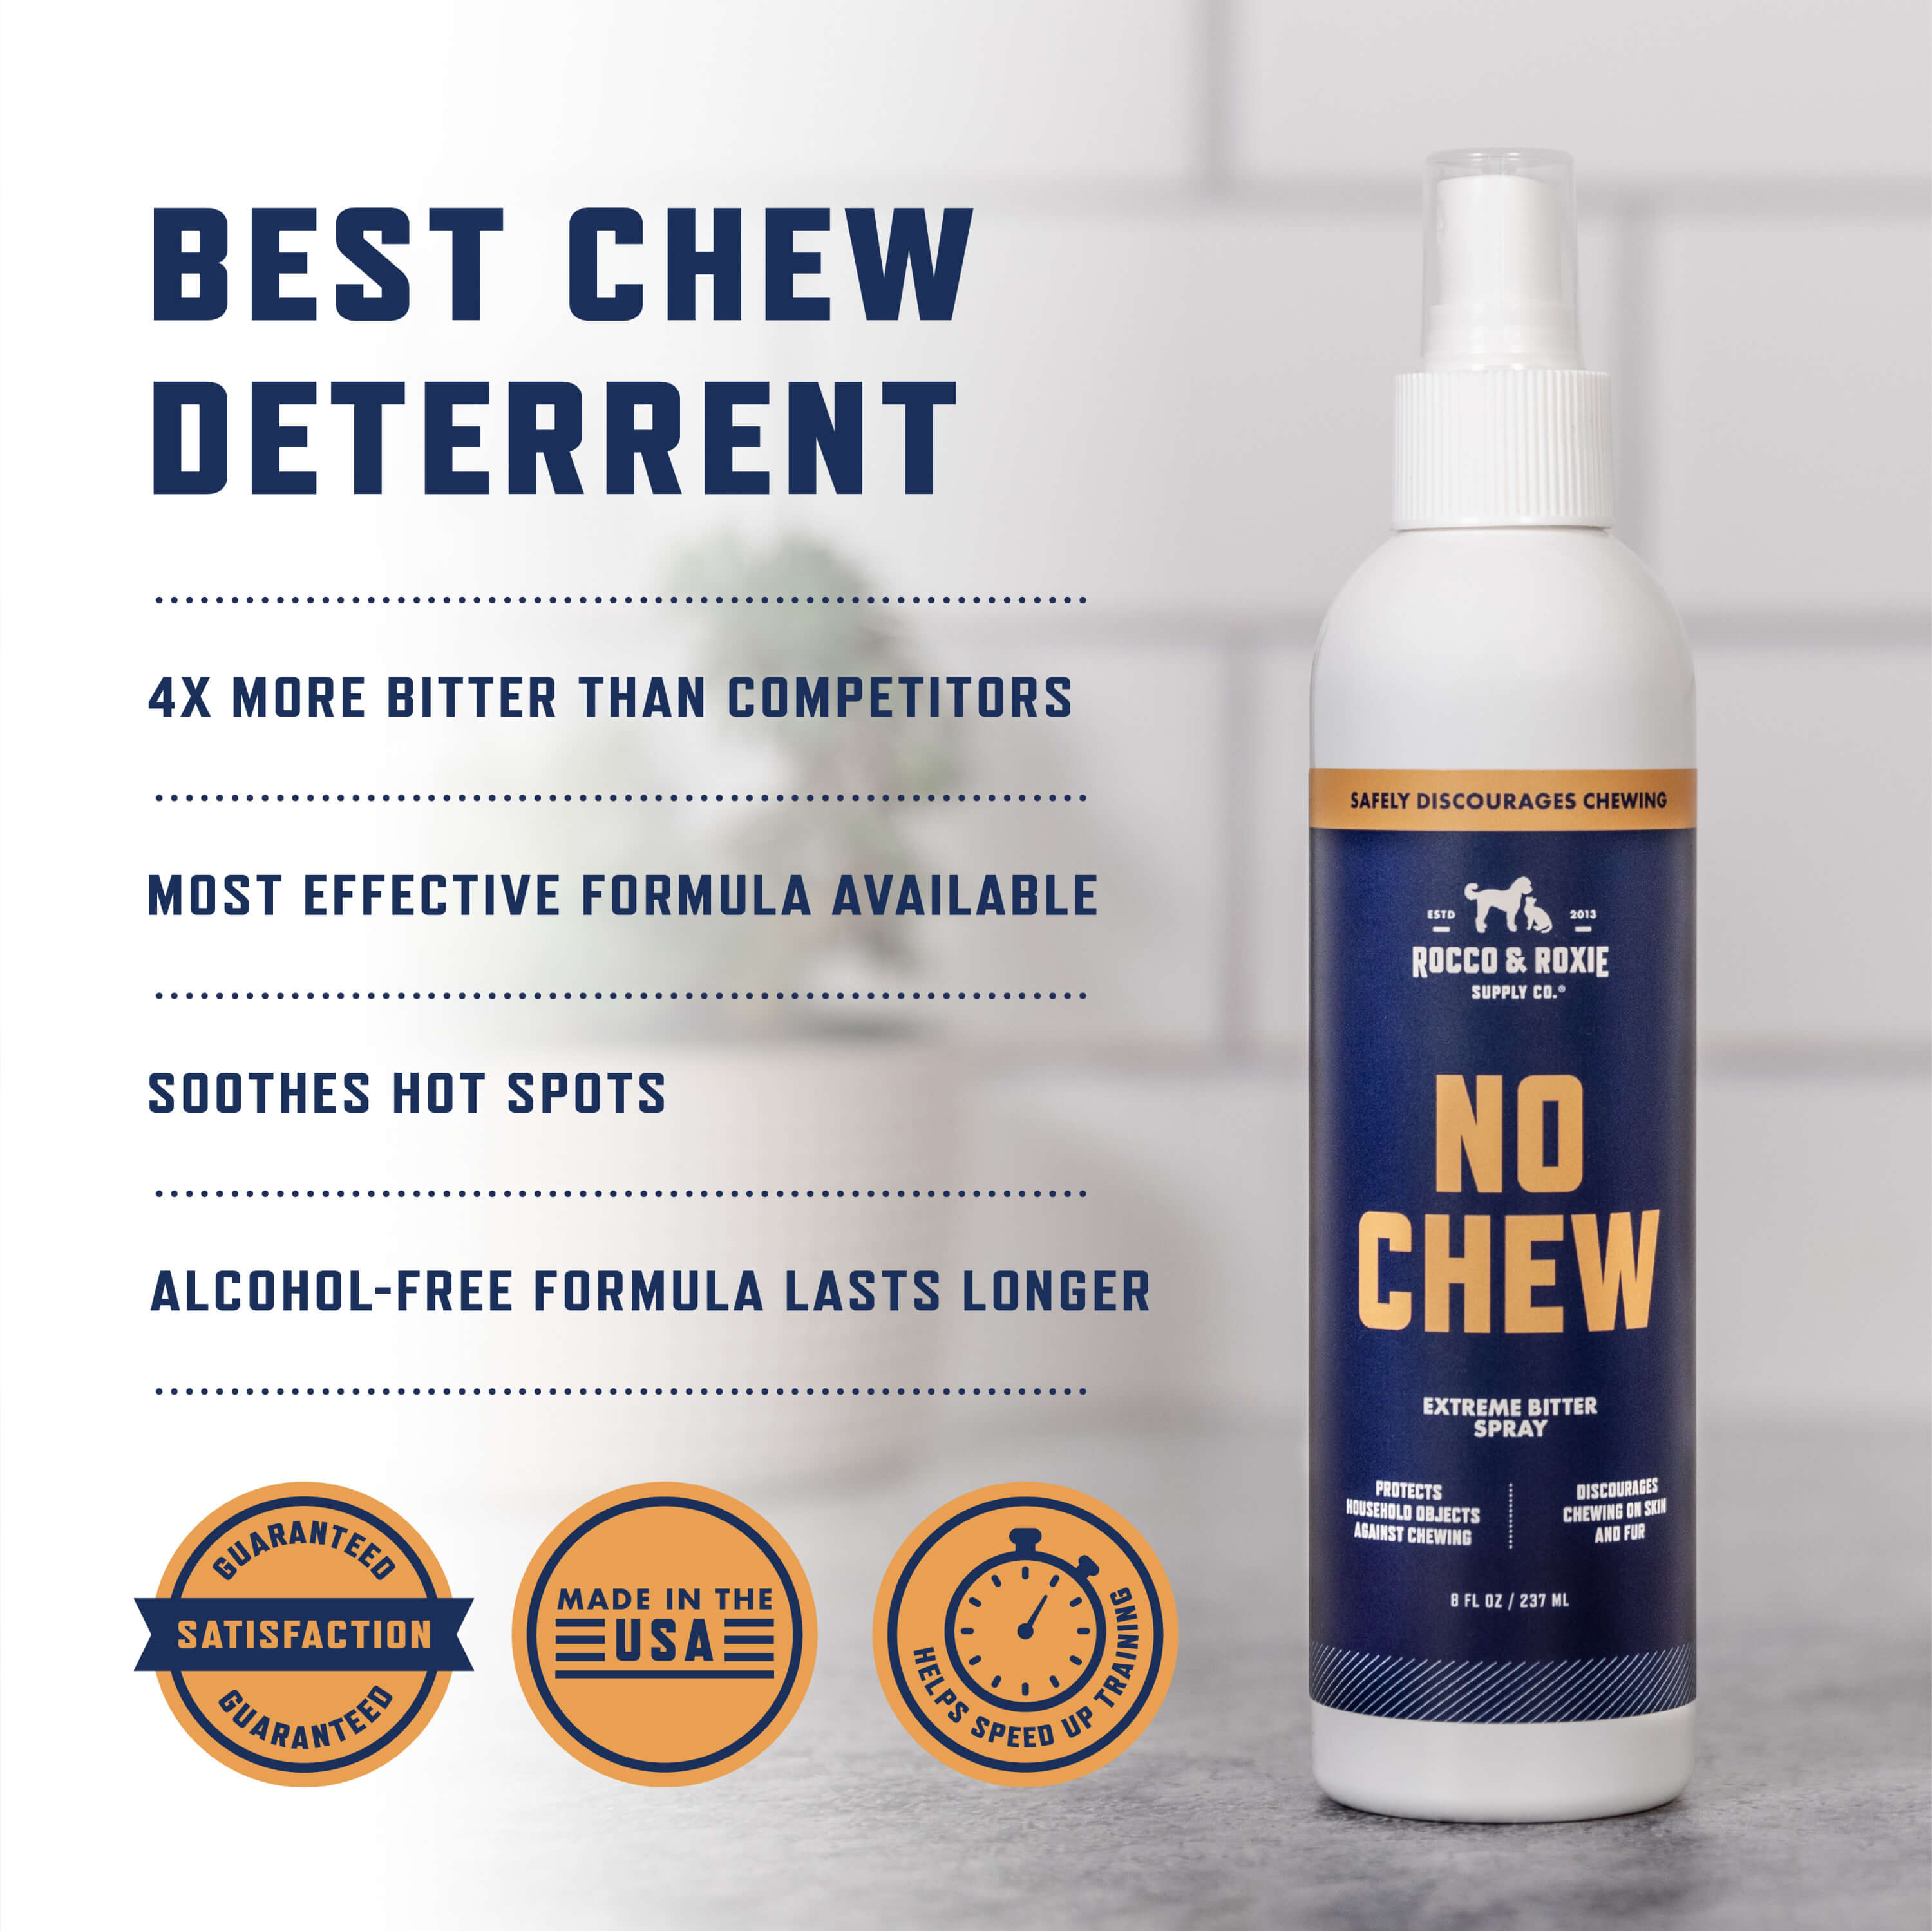 No Chew Extreme Bitter Spray